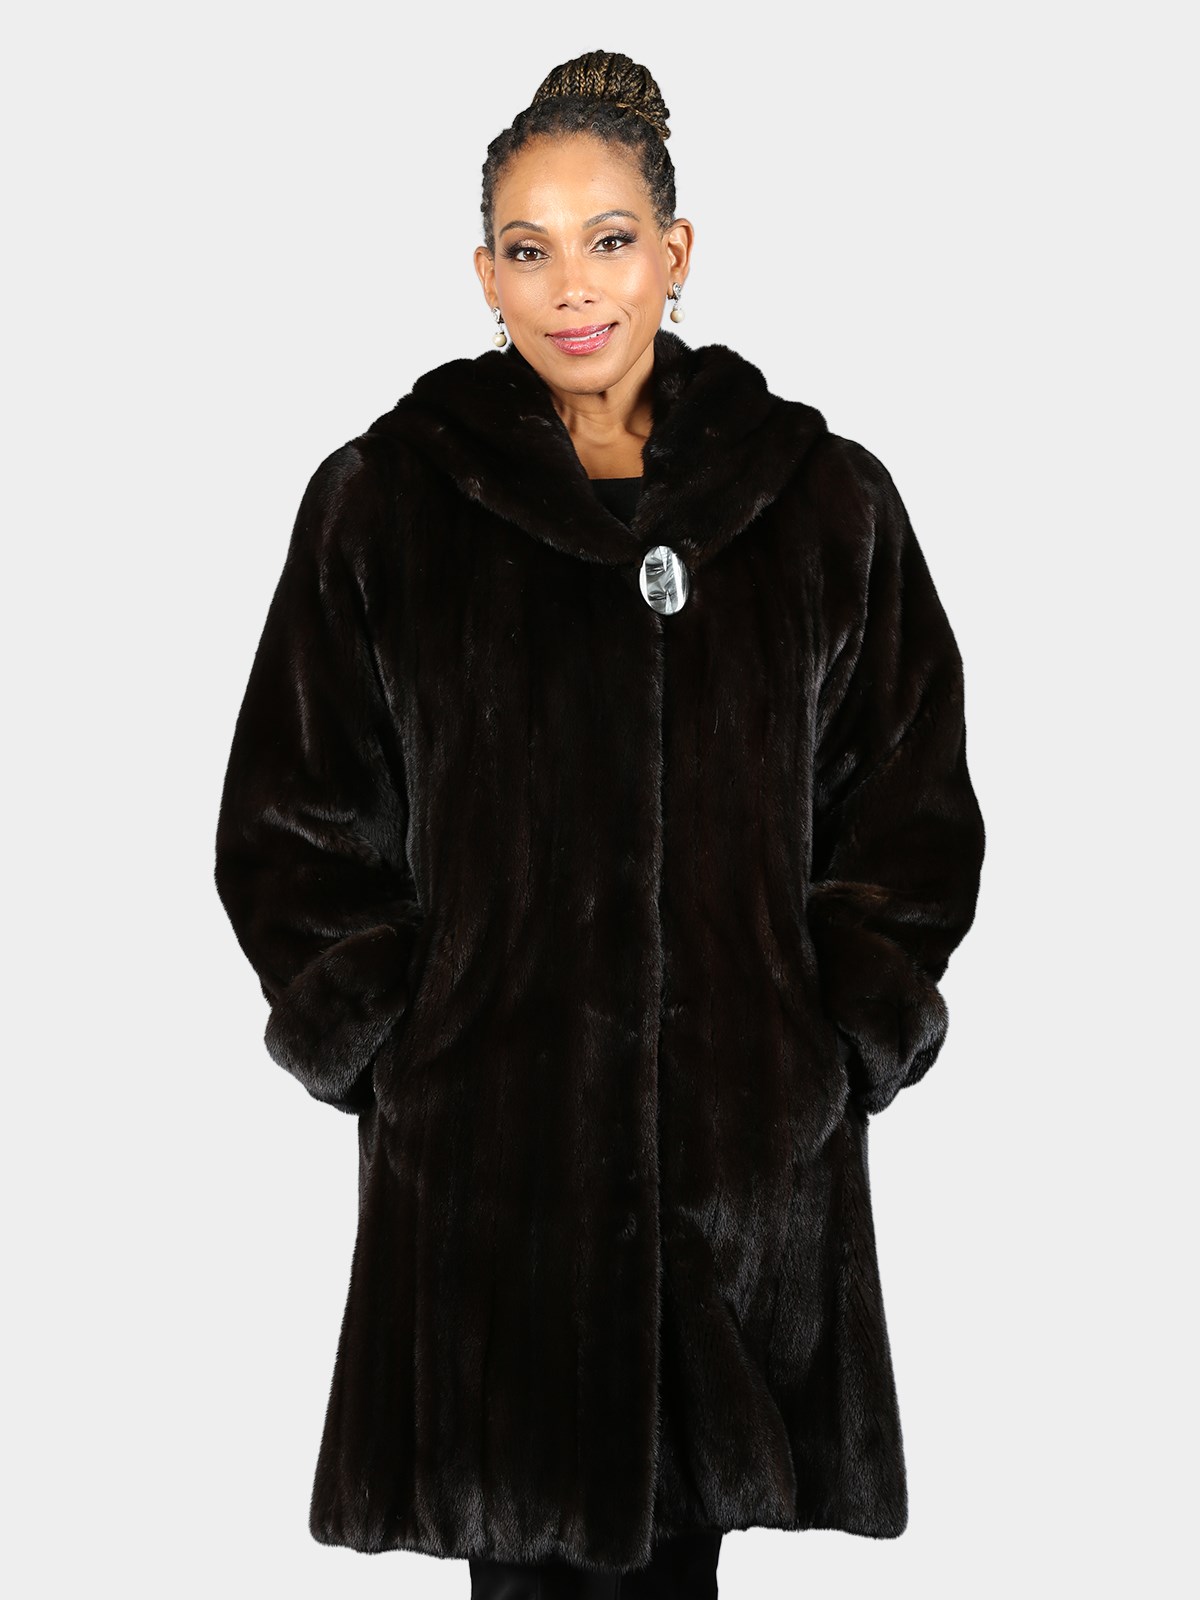 Woman's Natural Deepest Mahogany Female Mink Fur 3/4 Coat with Hood